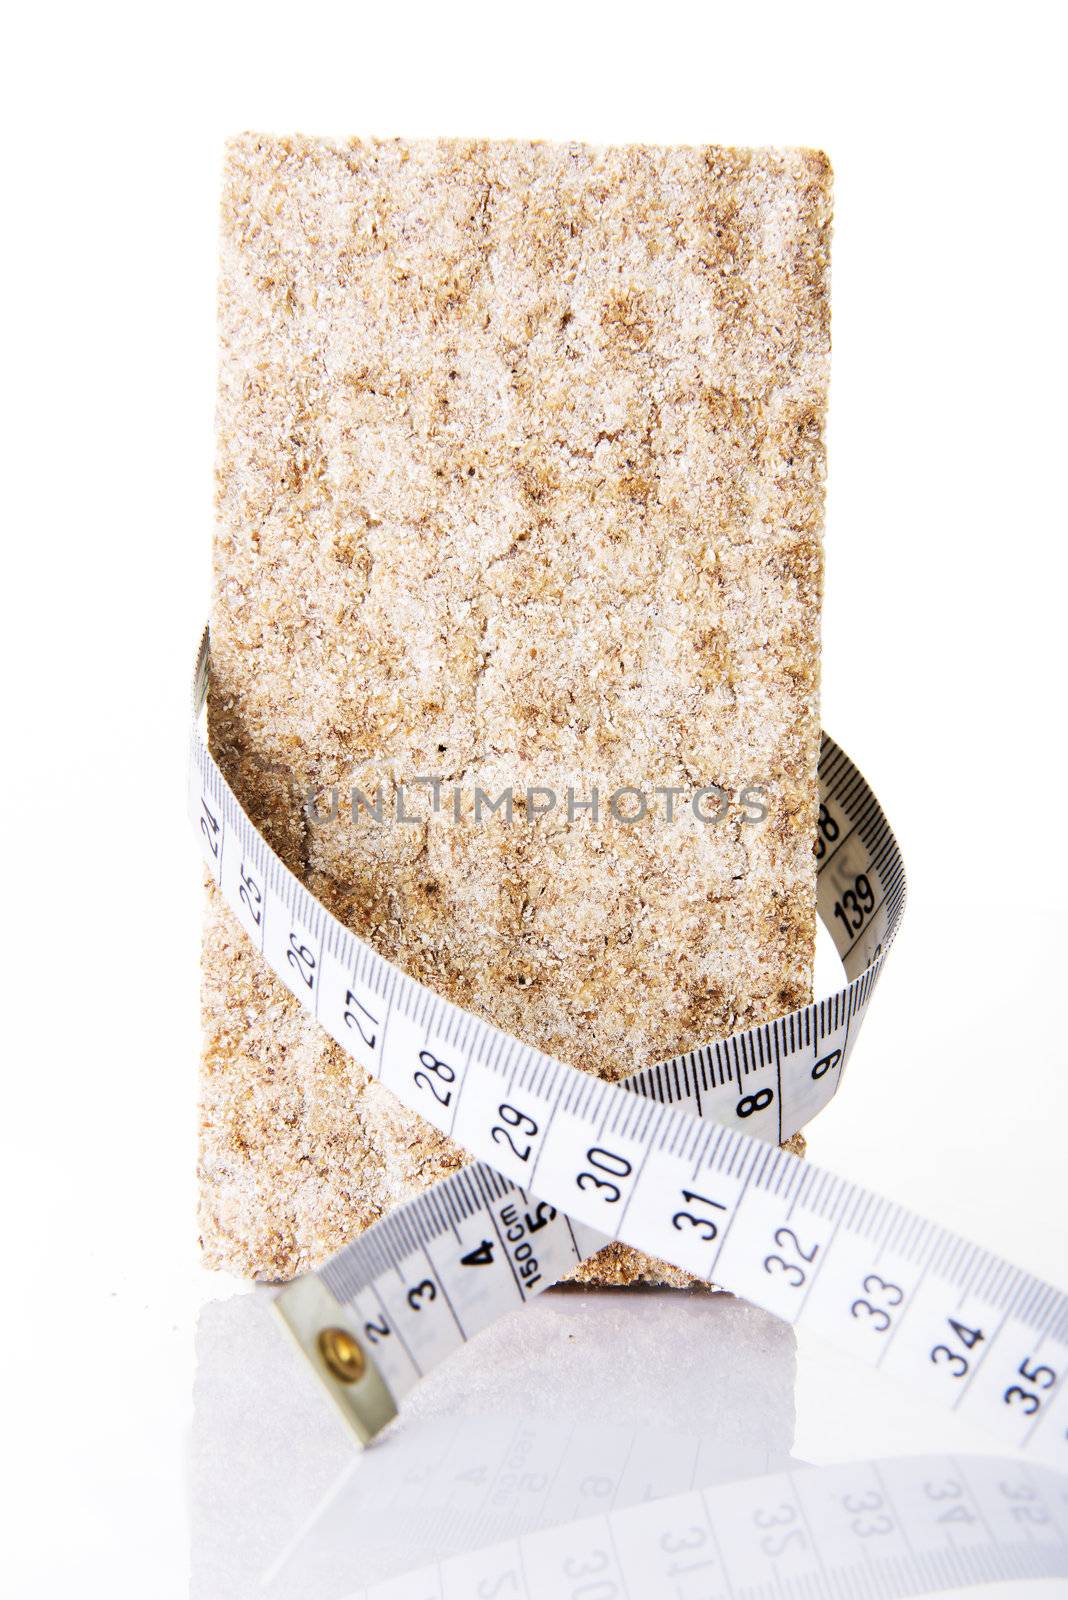 Healthy rye cracker bread by BDS